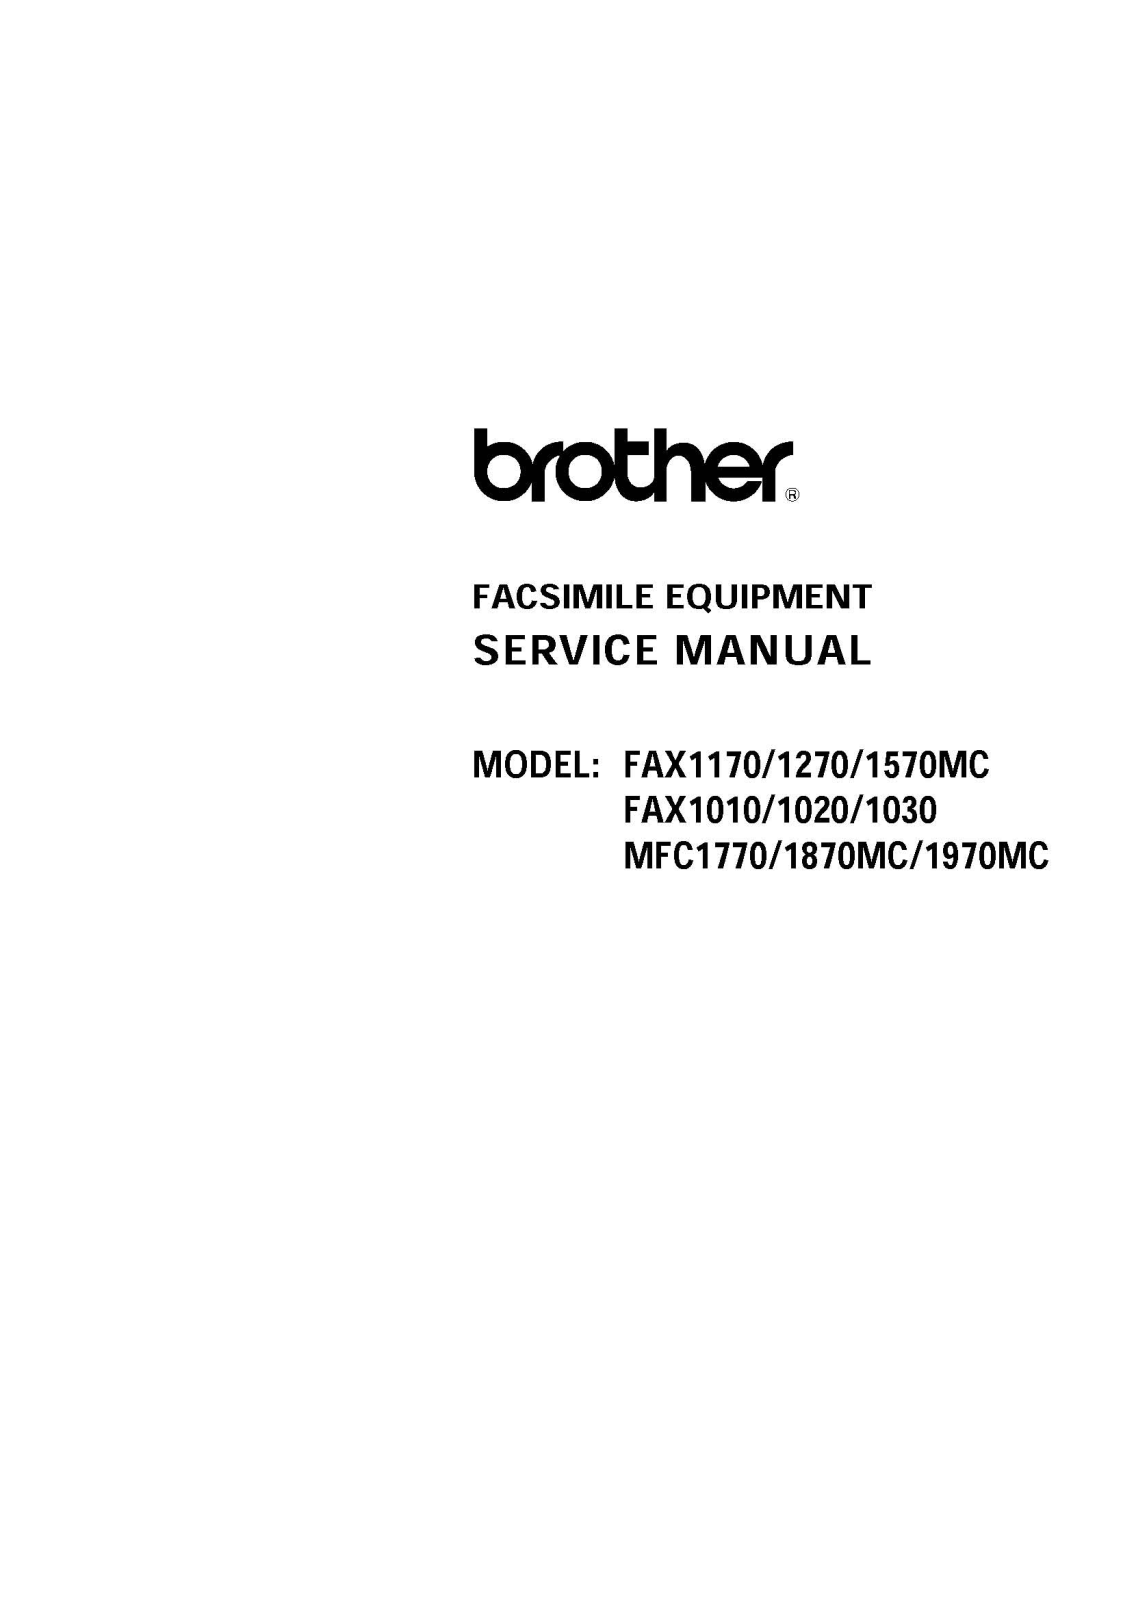 Brother MFC-1970MC, MFC-1870MC, MFC-1770, FAX-1030, FAX-1020 Service Manual